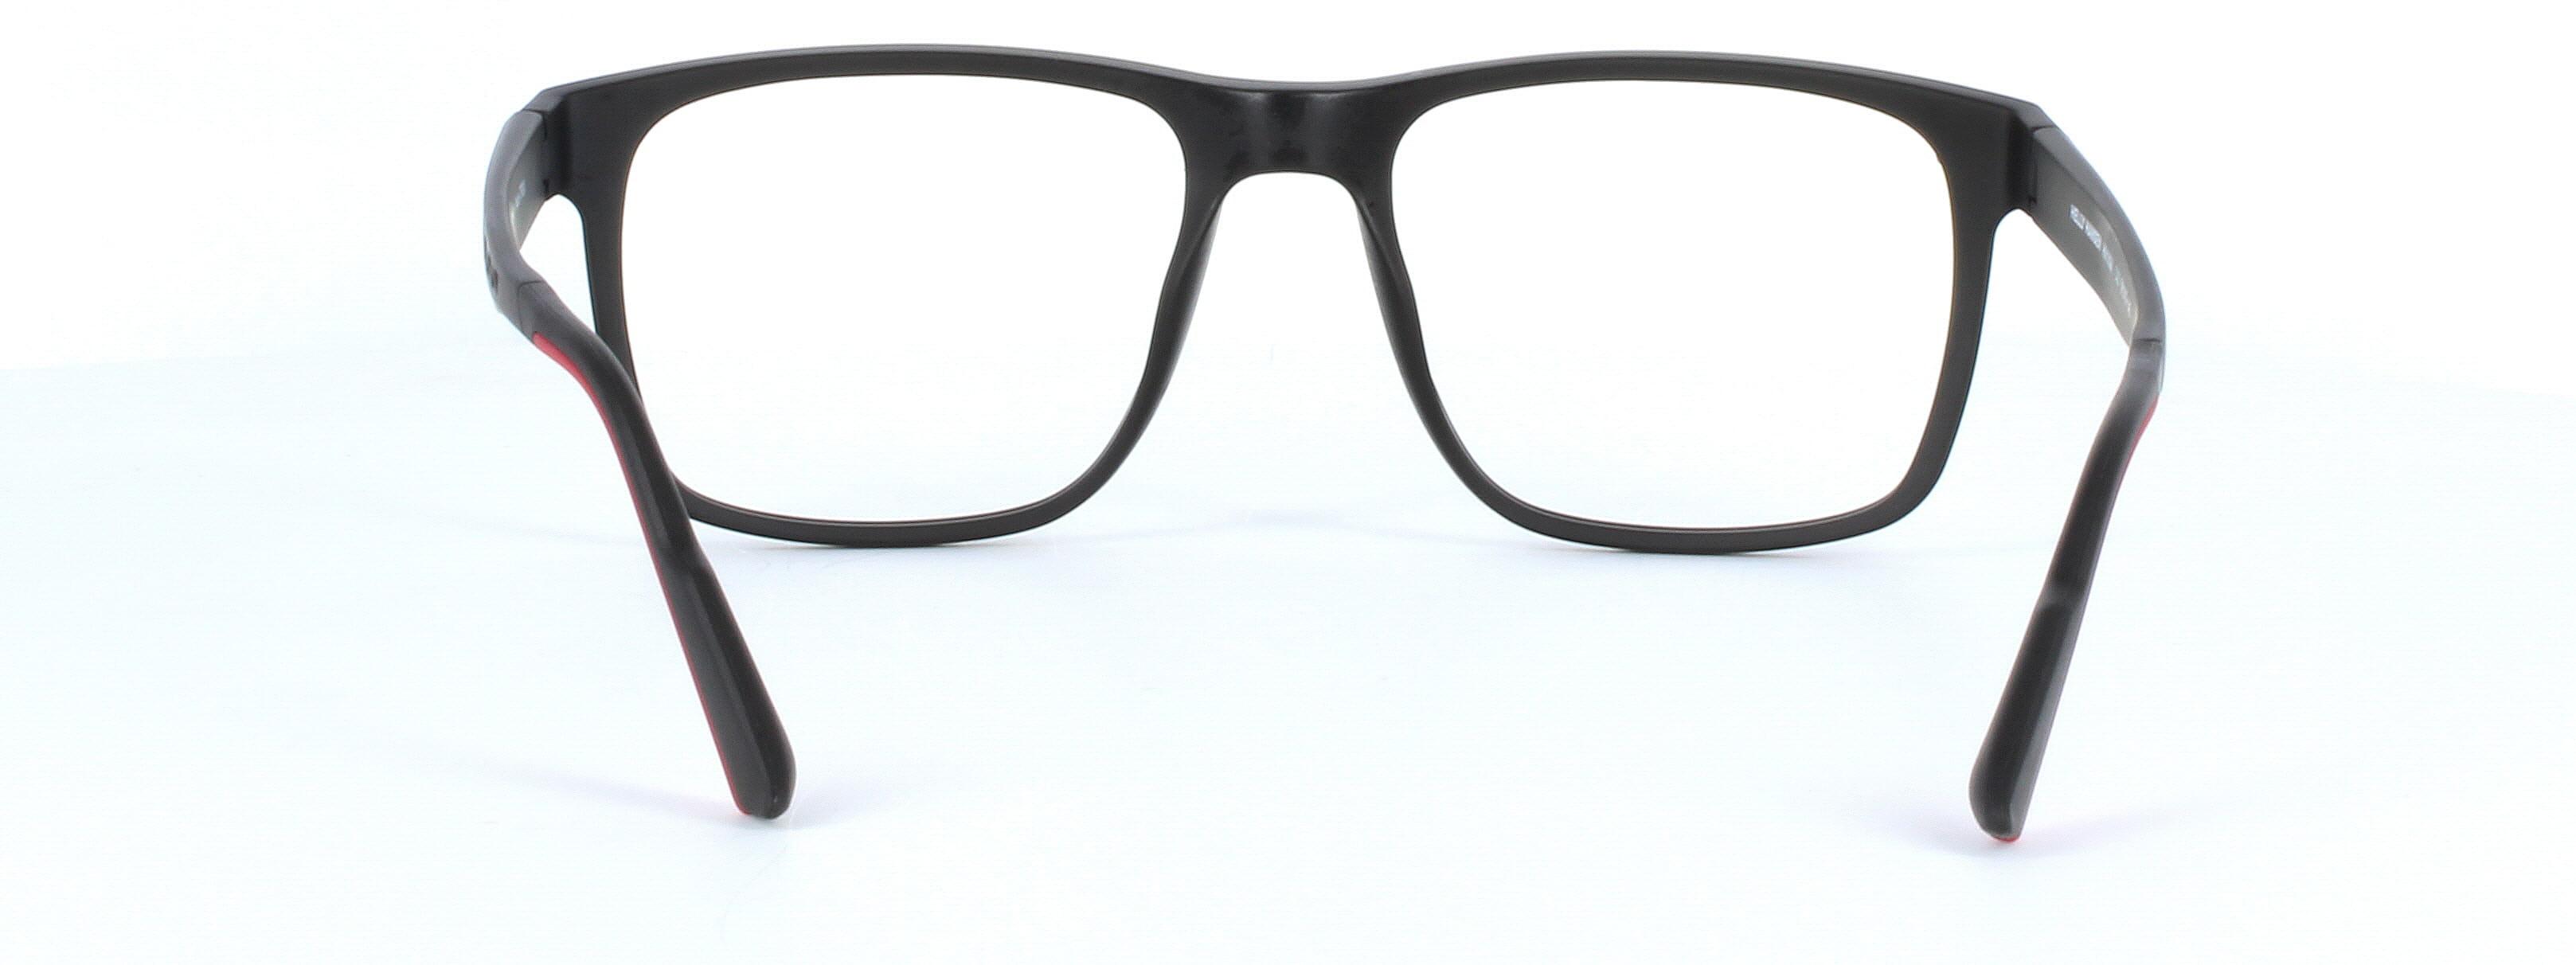 Helly Hansen 1064 - Lightweight (TR90 material) black gents full rim glasses - image view 3